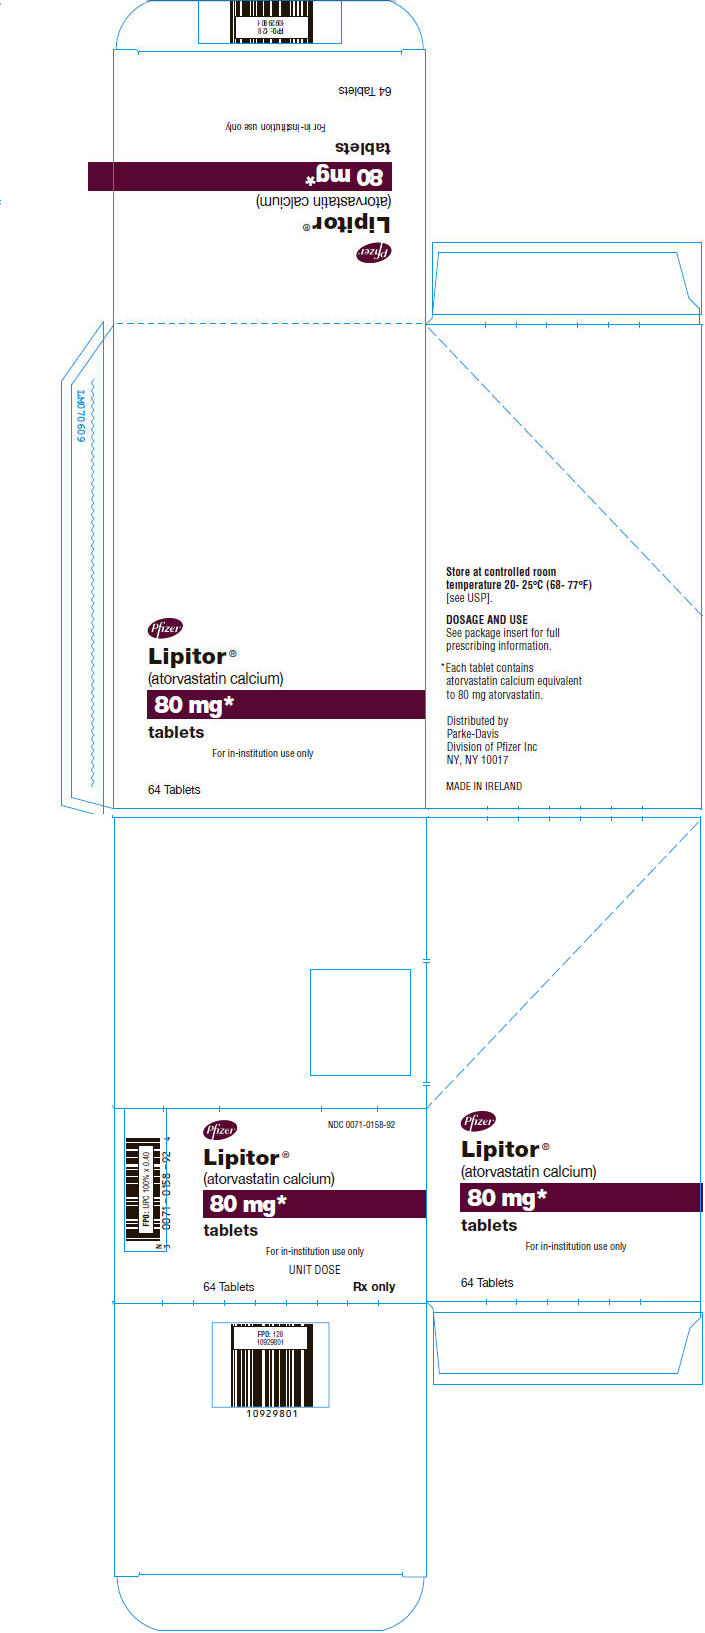 PRINCIPAL DISPLAY PANEL - 80 mg Blister Pack Carton